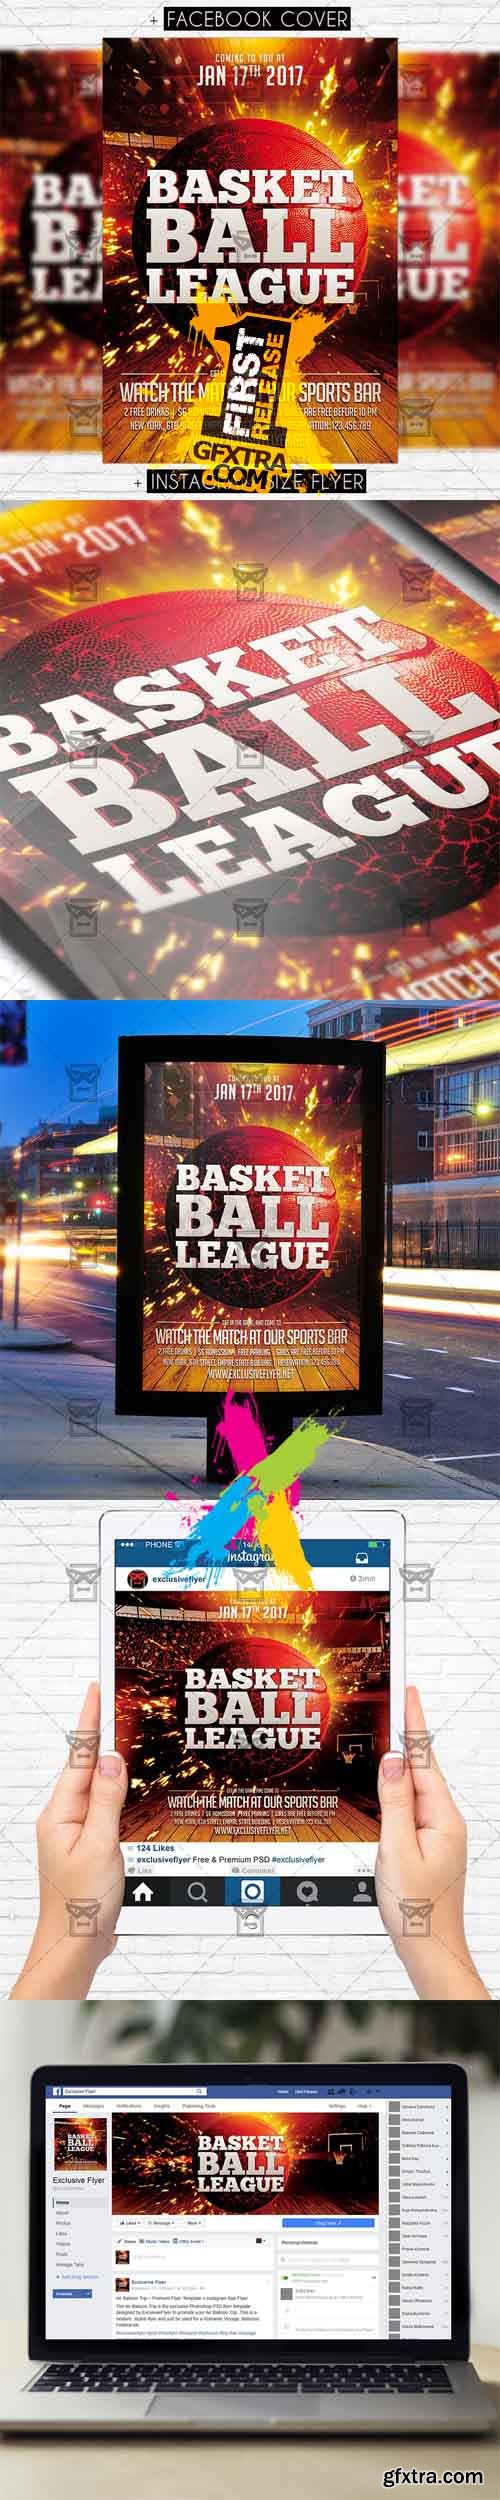 Basketball League - Premium Flyer Template